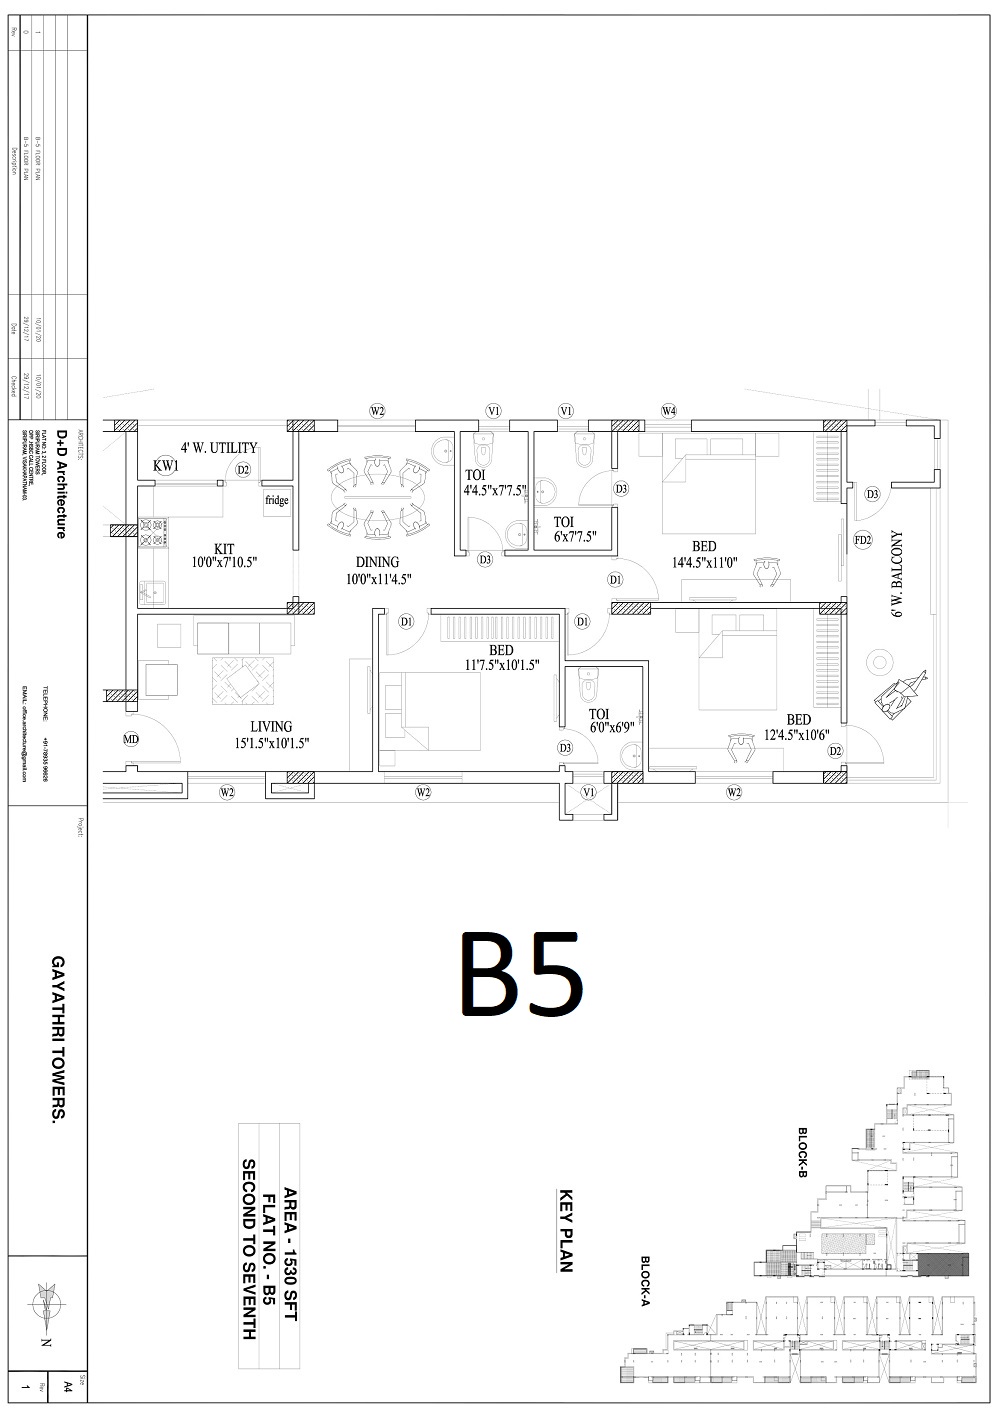 B5 - Tipcal Floor Plan